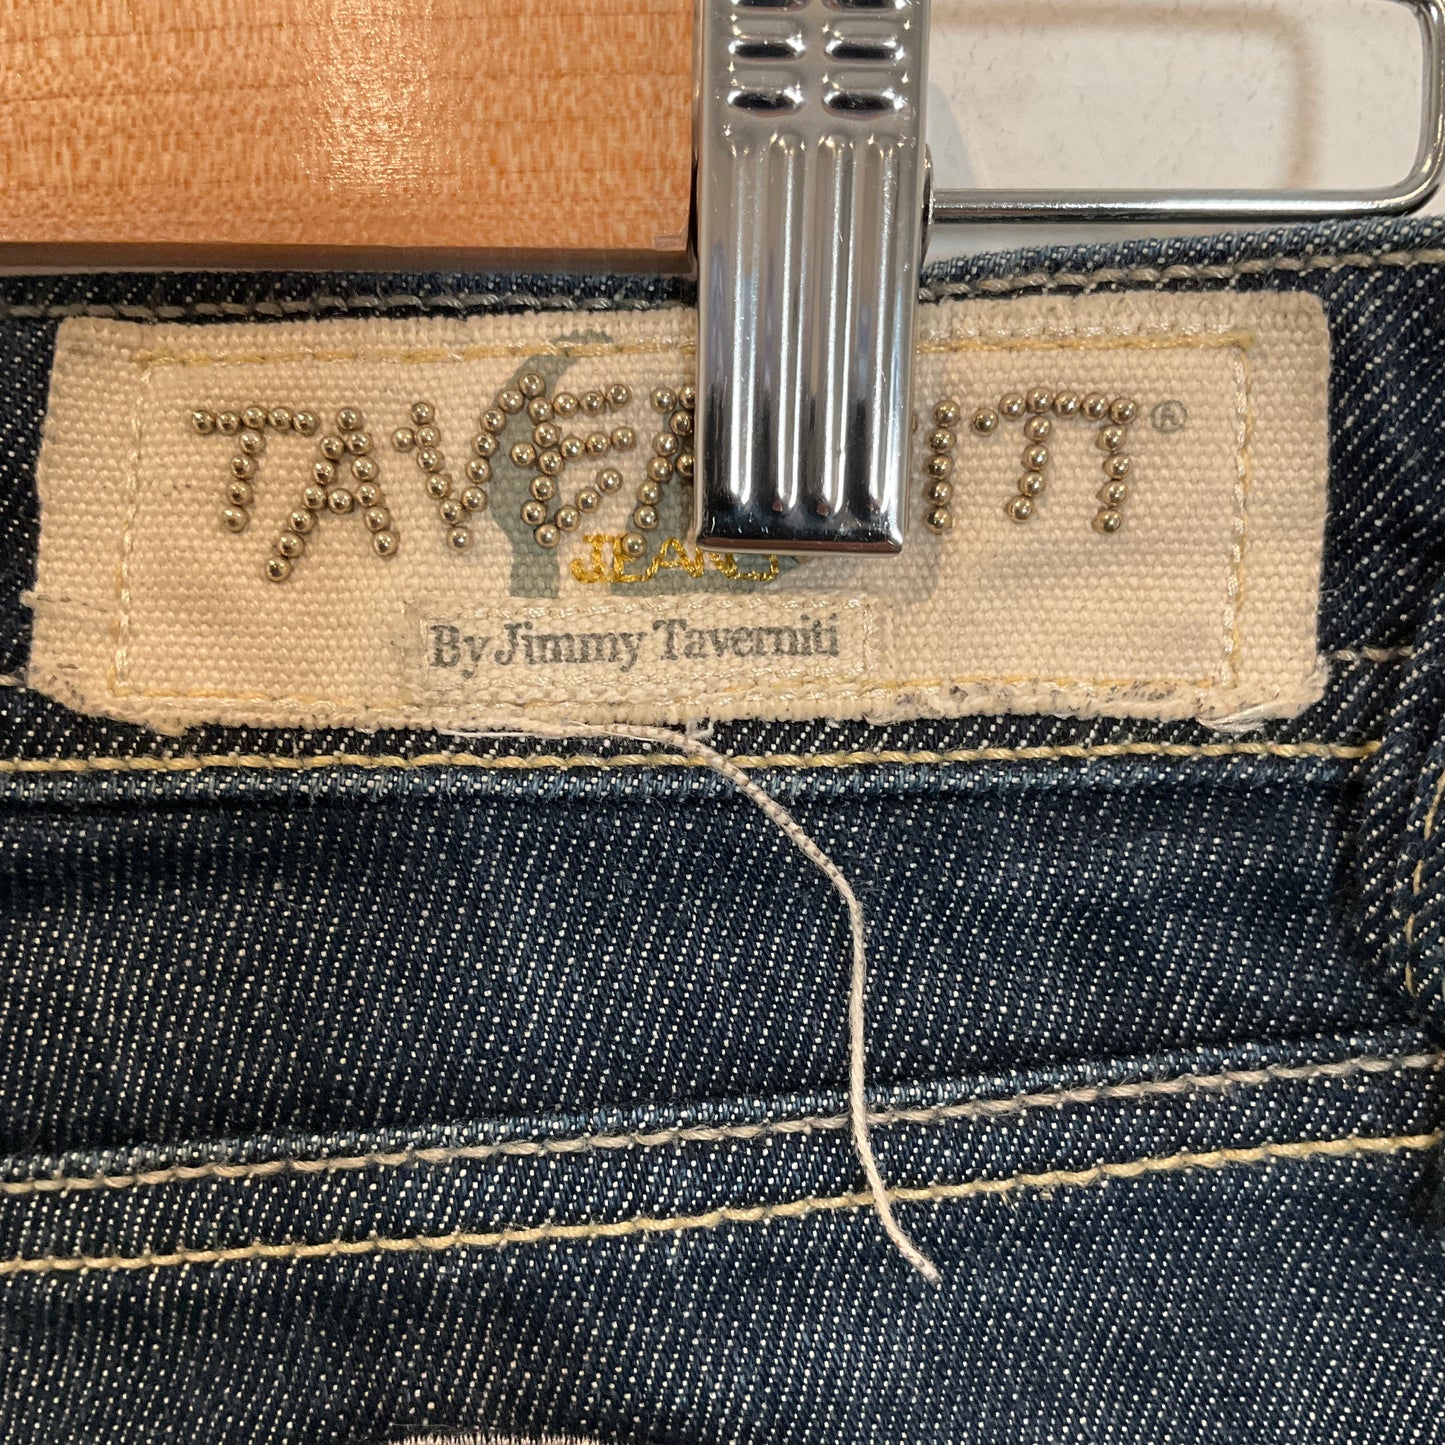 Jimmy Taverniti - Jeans